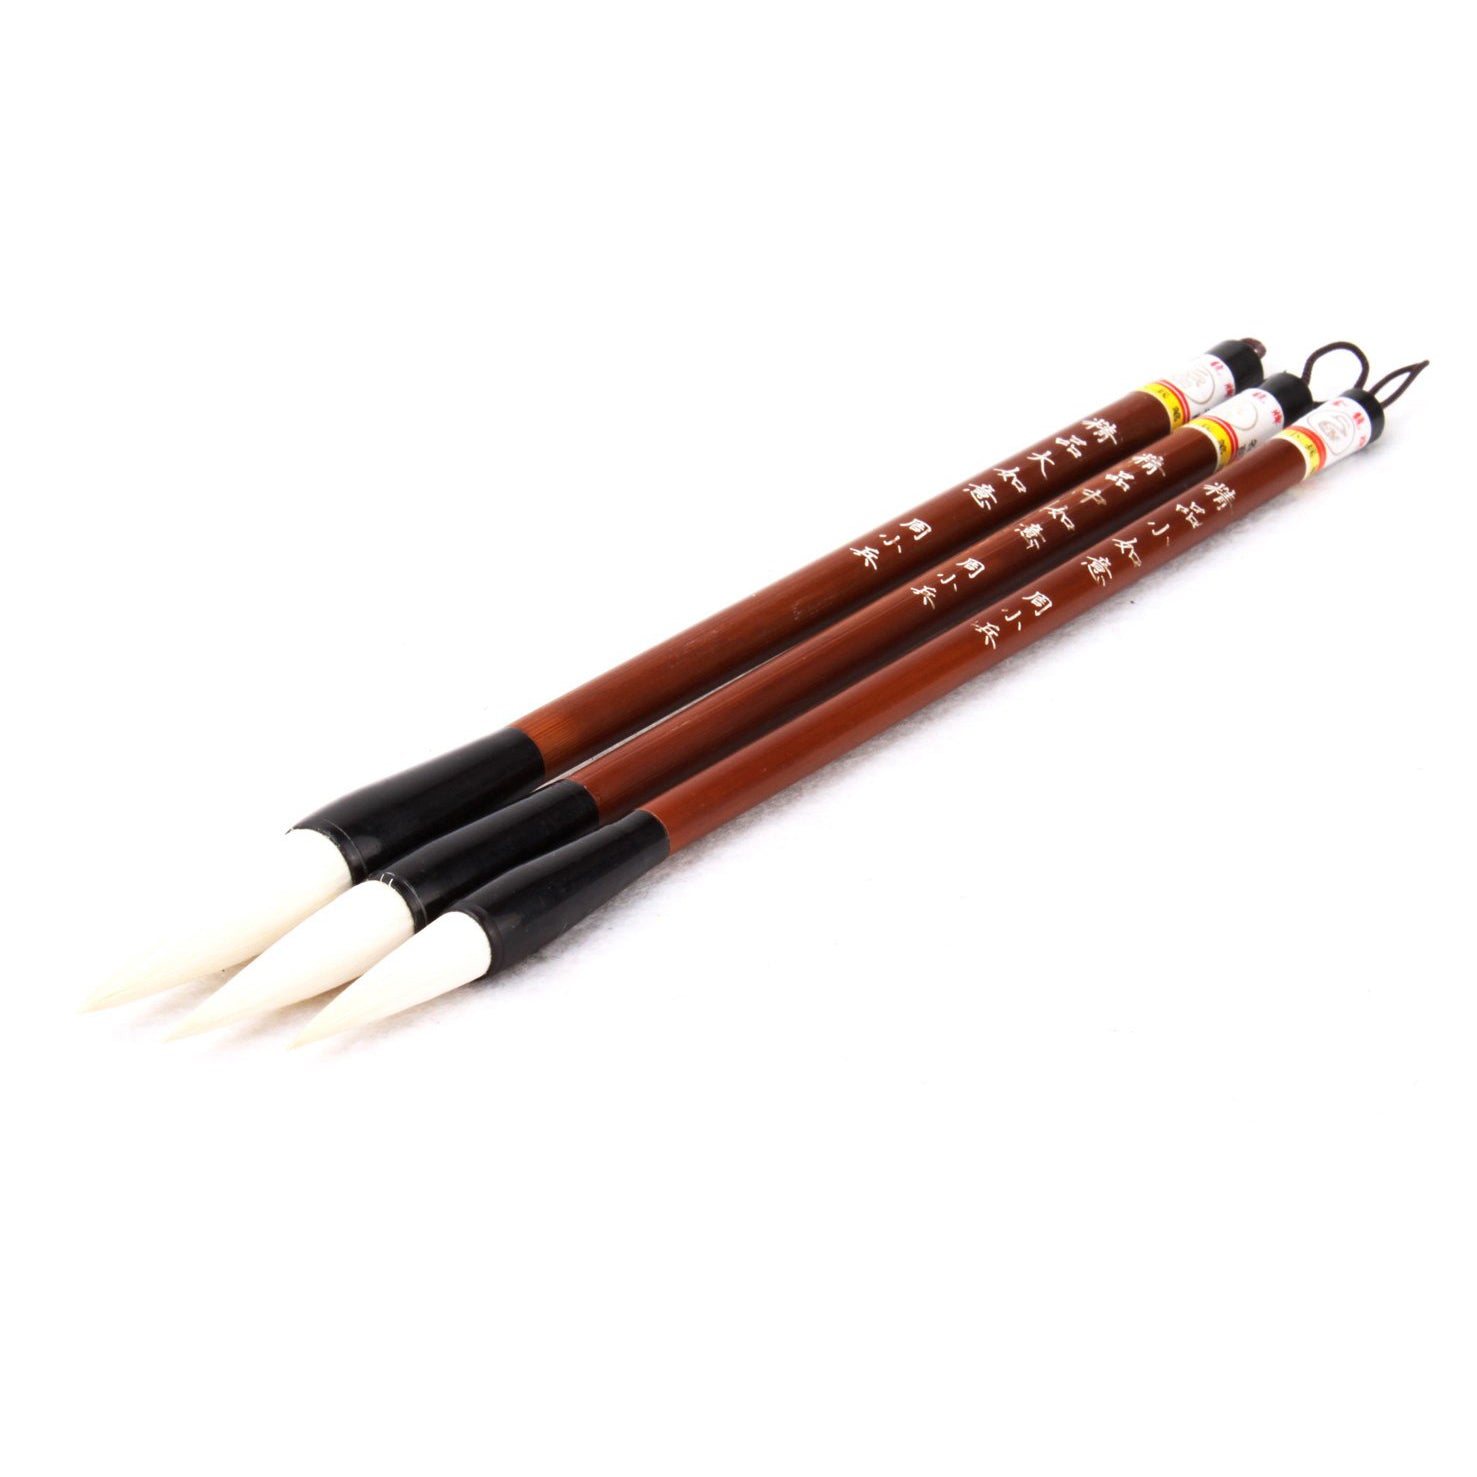 Huakaile 3 Sizes Chinese Writing Brushes, Chinese Calligraphy Brush Set,  Chinese Painting Ink Brushes with Bamboo Pen Holder, Traditional Chinese  Art